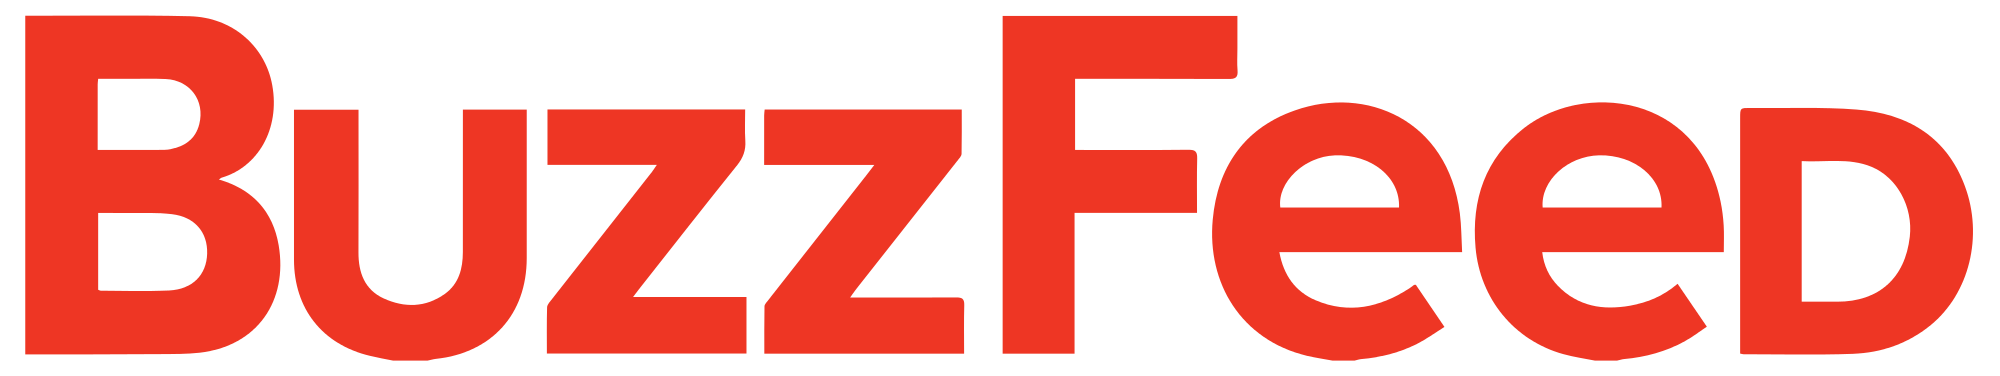 Buzzfeed Logo PNG - 180250